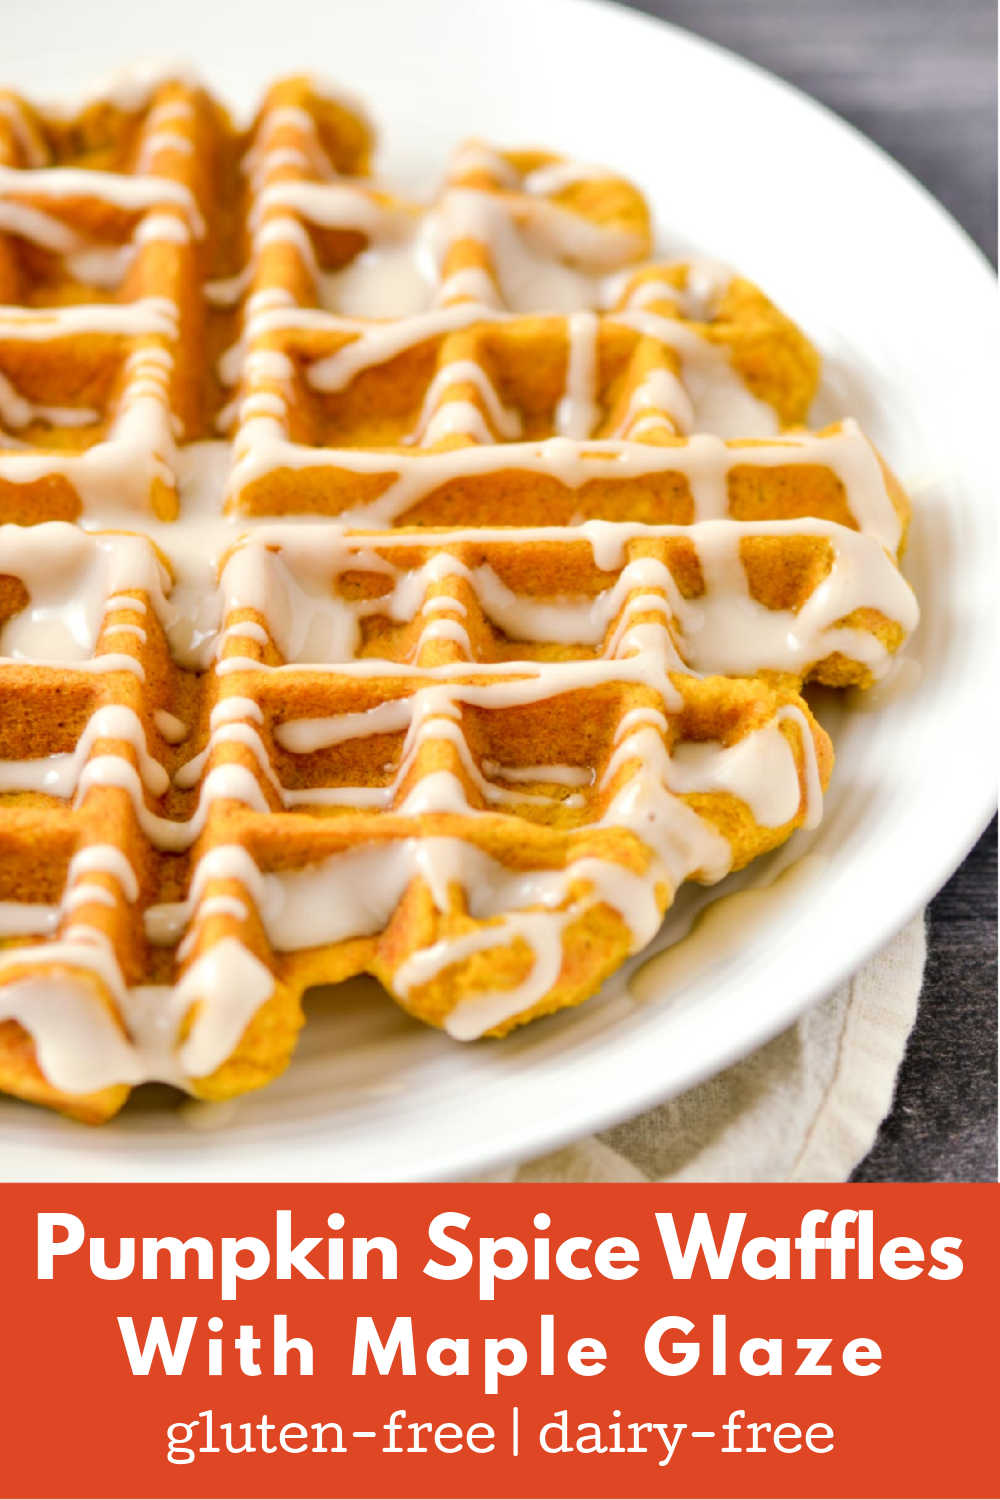 Maple glaze drizzled over gluten-free pumpkin waffles.